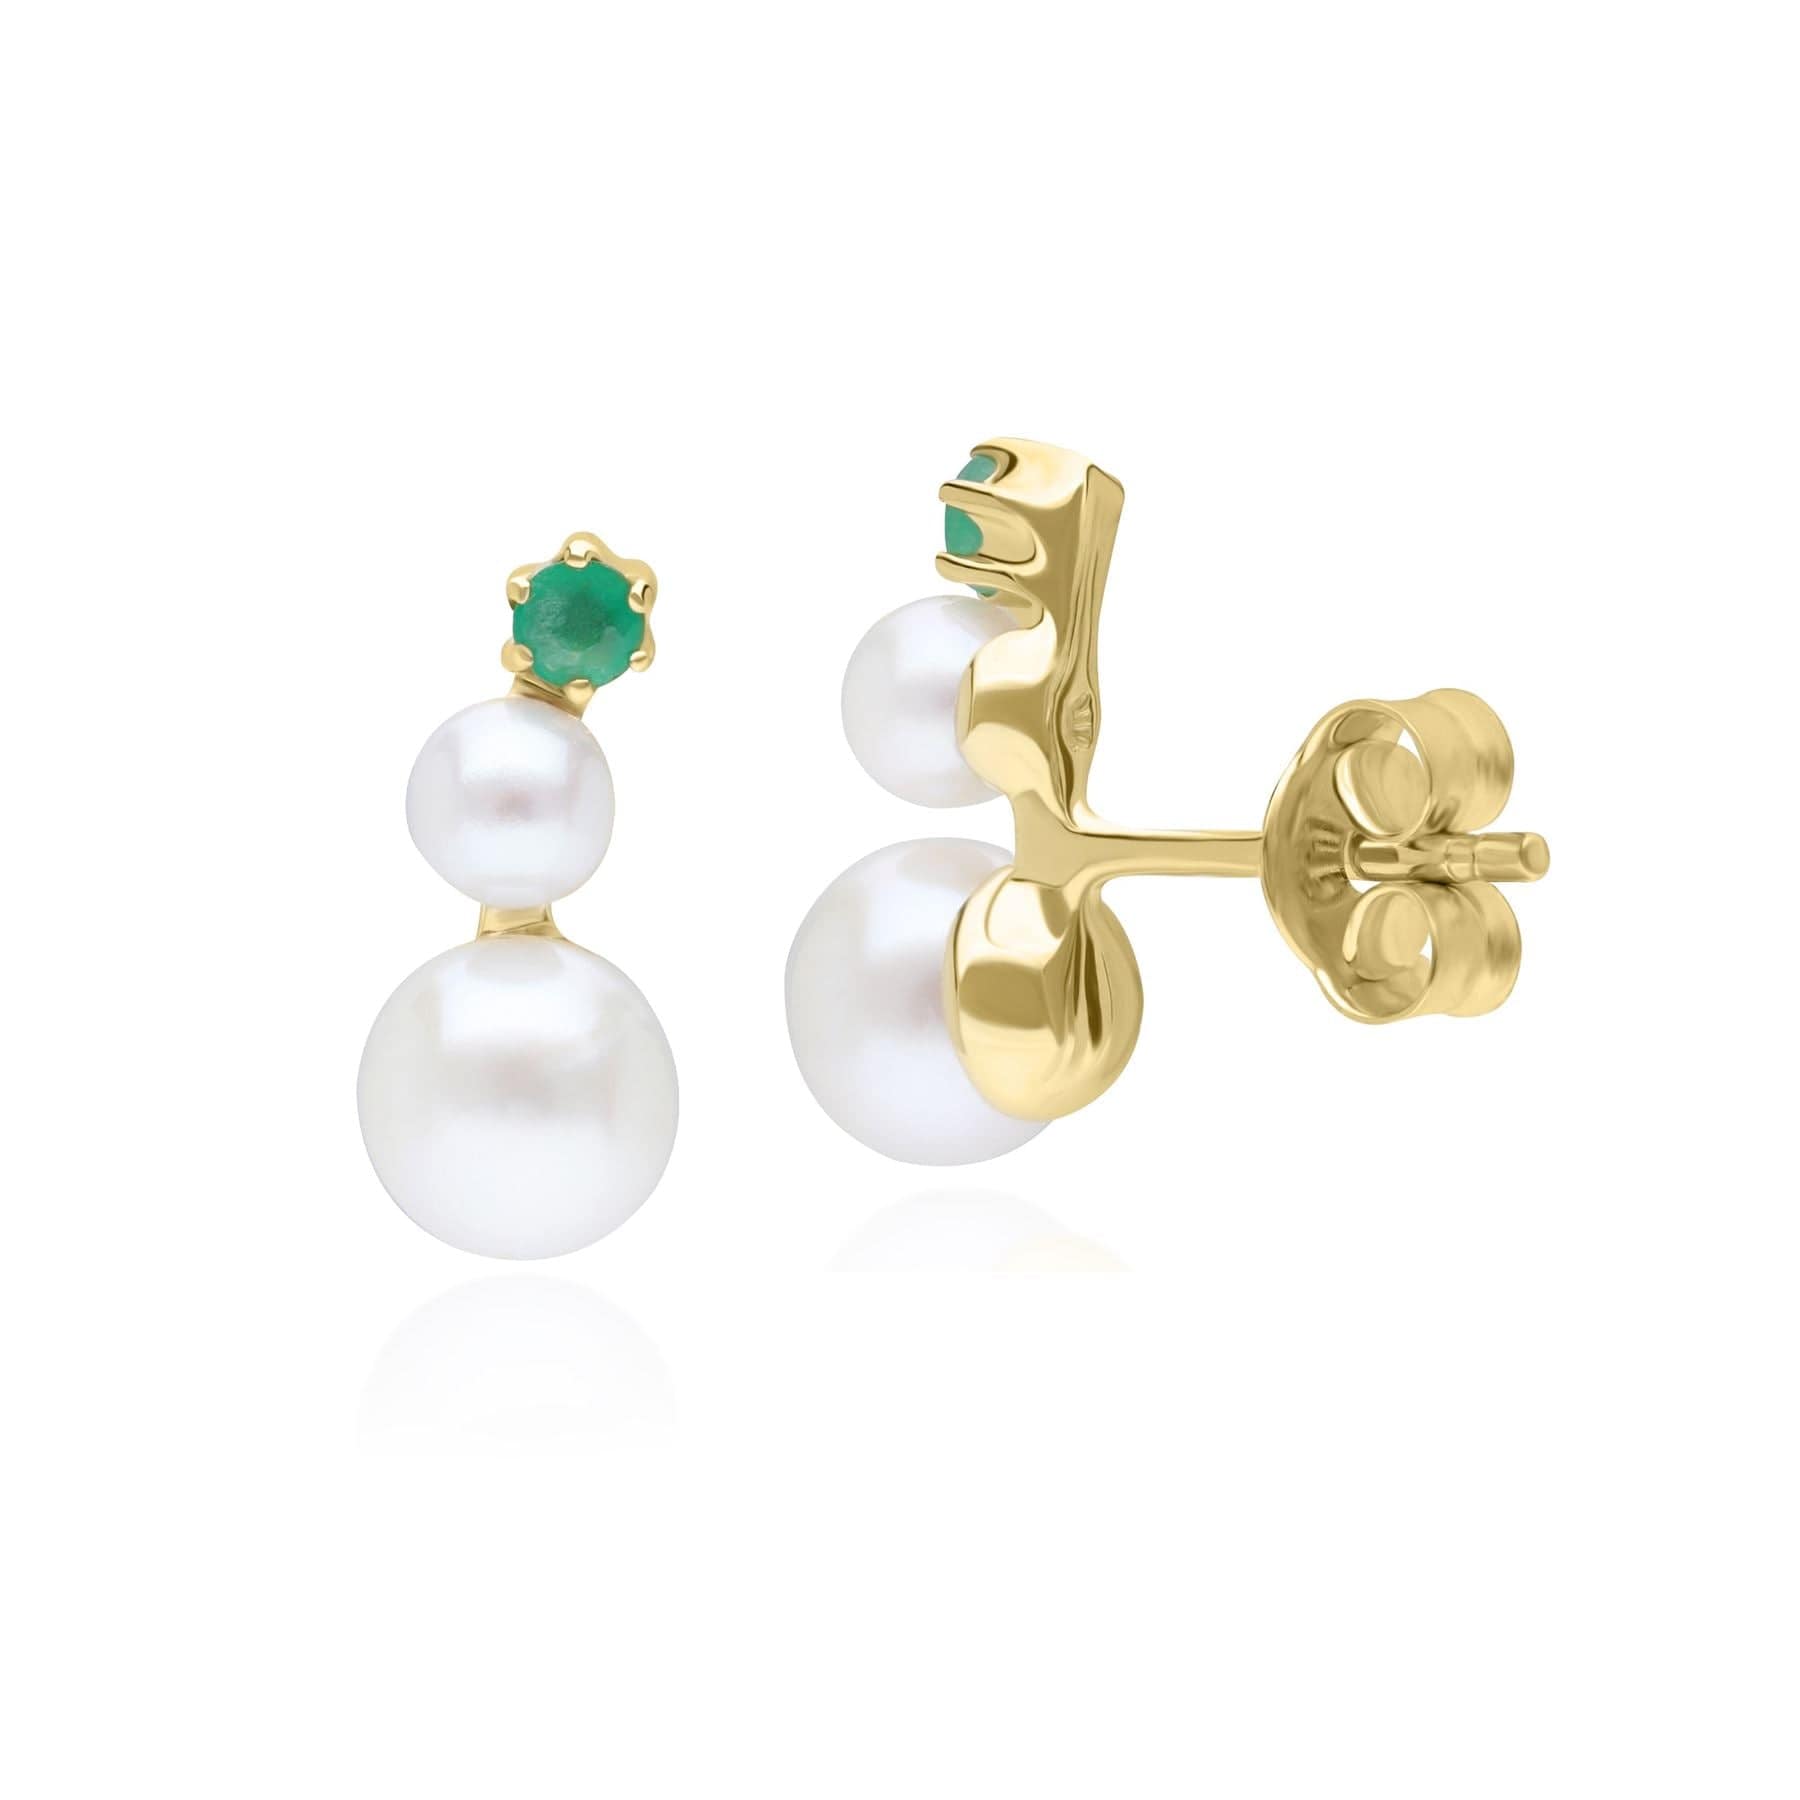 Modern Pearl & Emerald Climber Stud Earrings in 9ct Yellow Gold - Gemondo